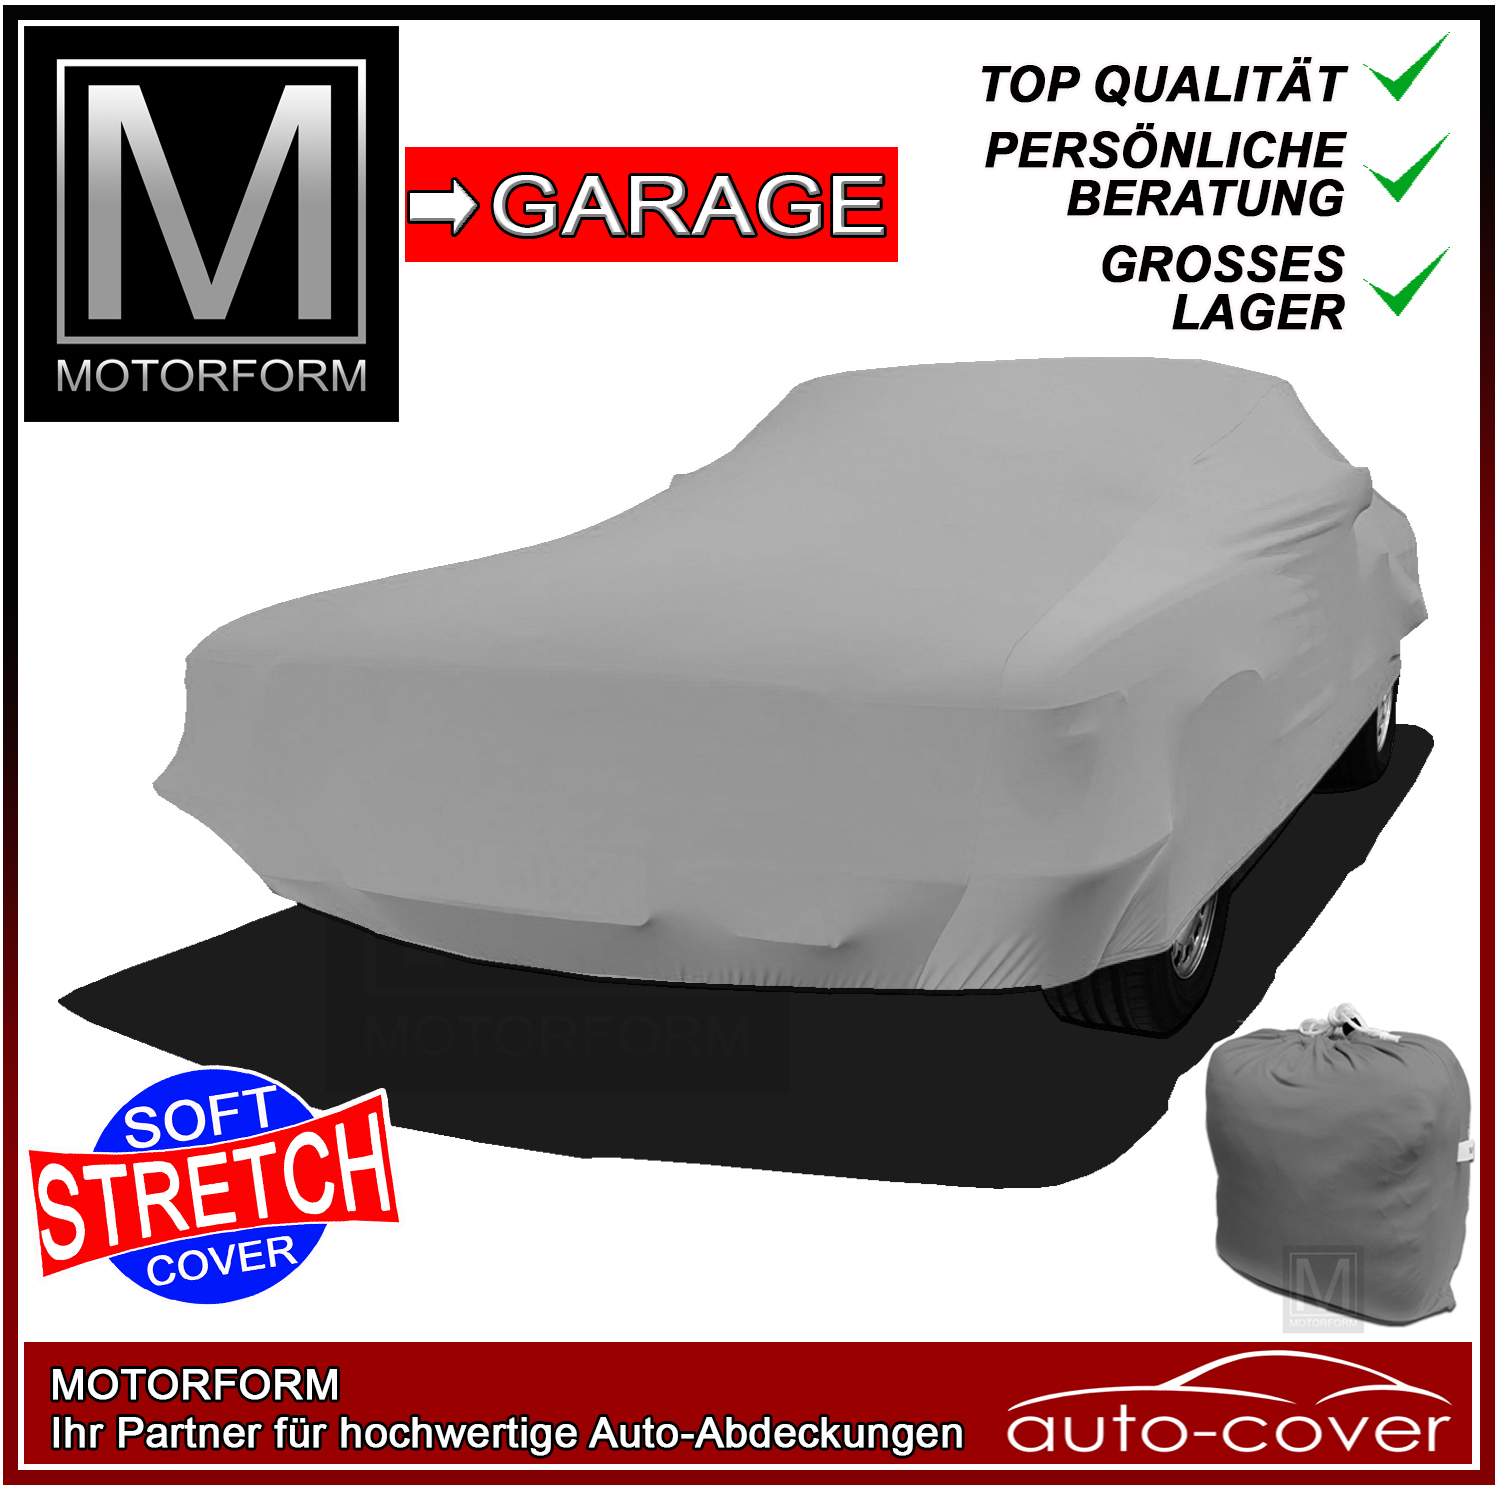 Grey Super Stretchy Cover for Alpine A110